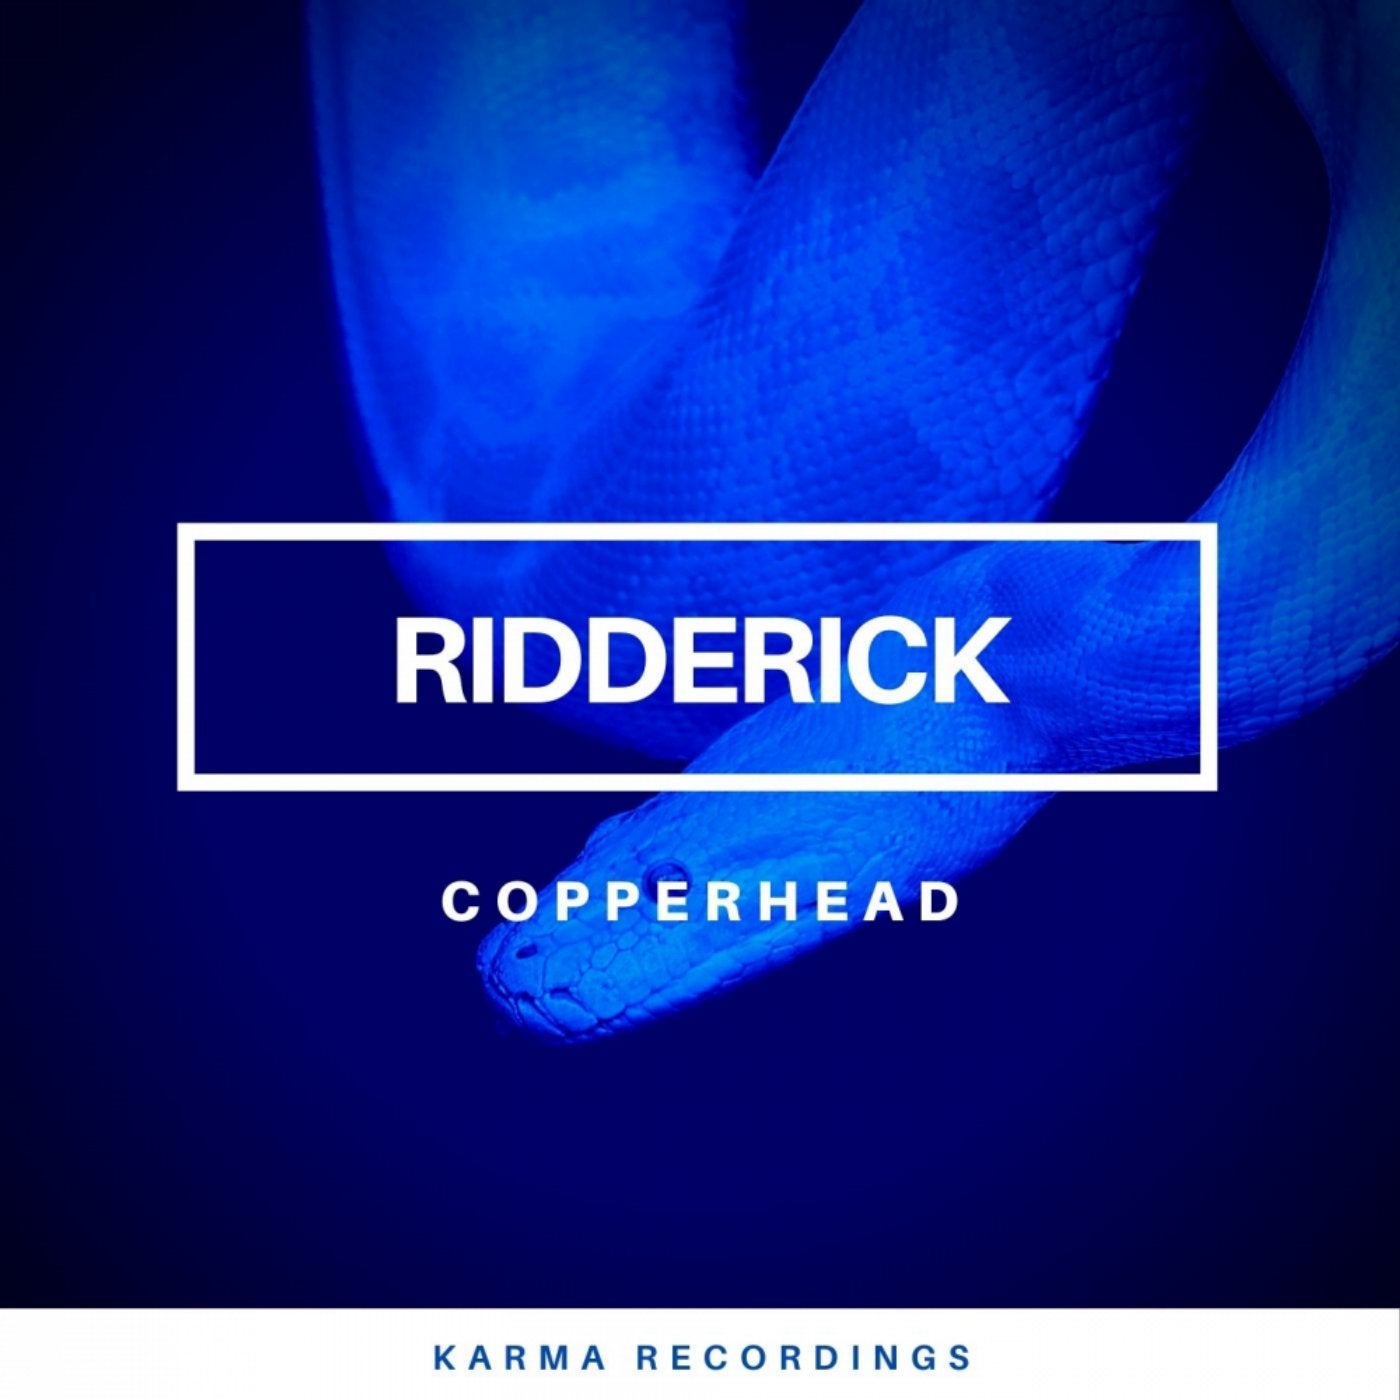 Ridderick music download - Beatport